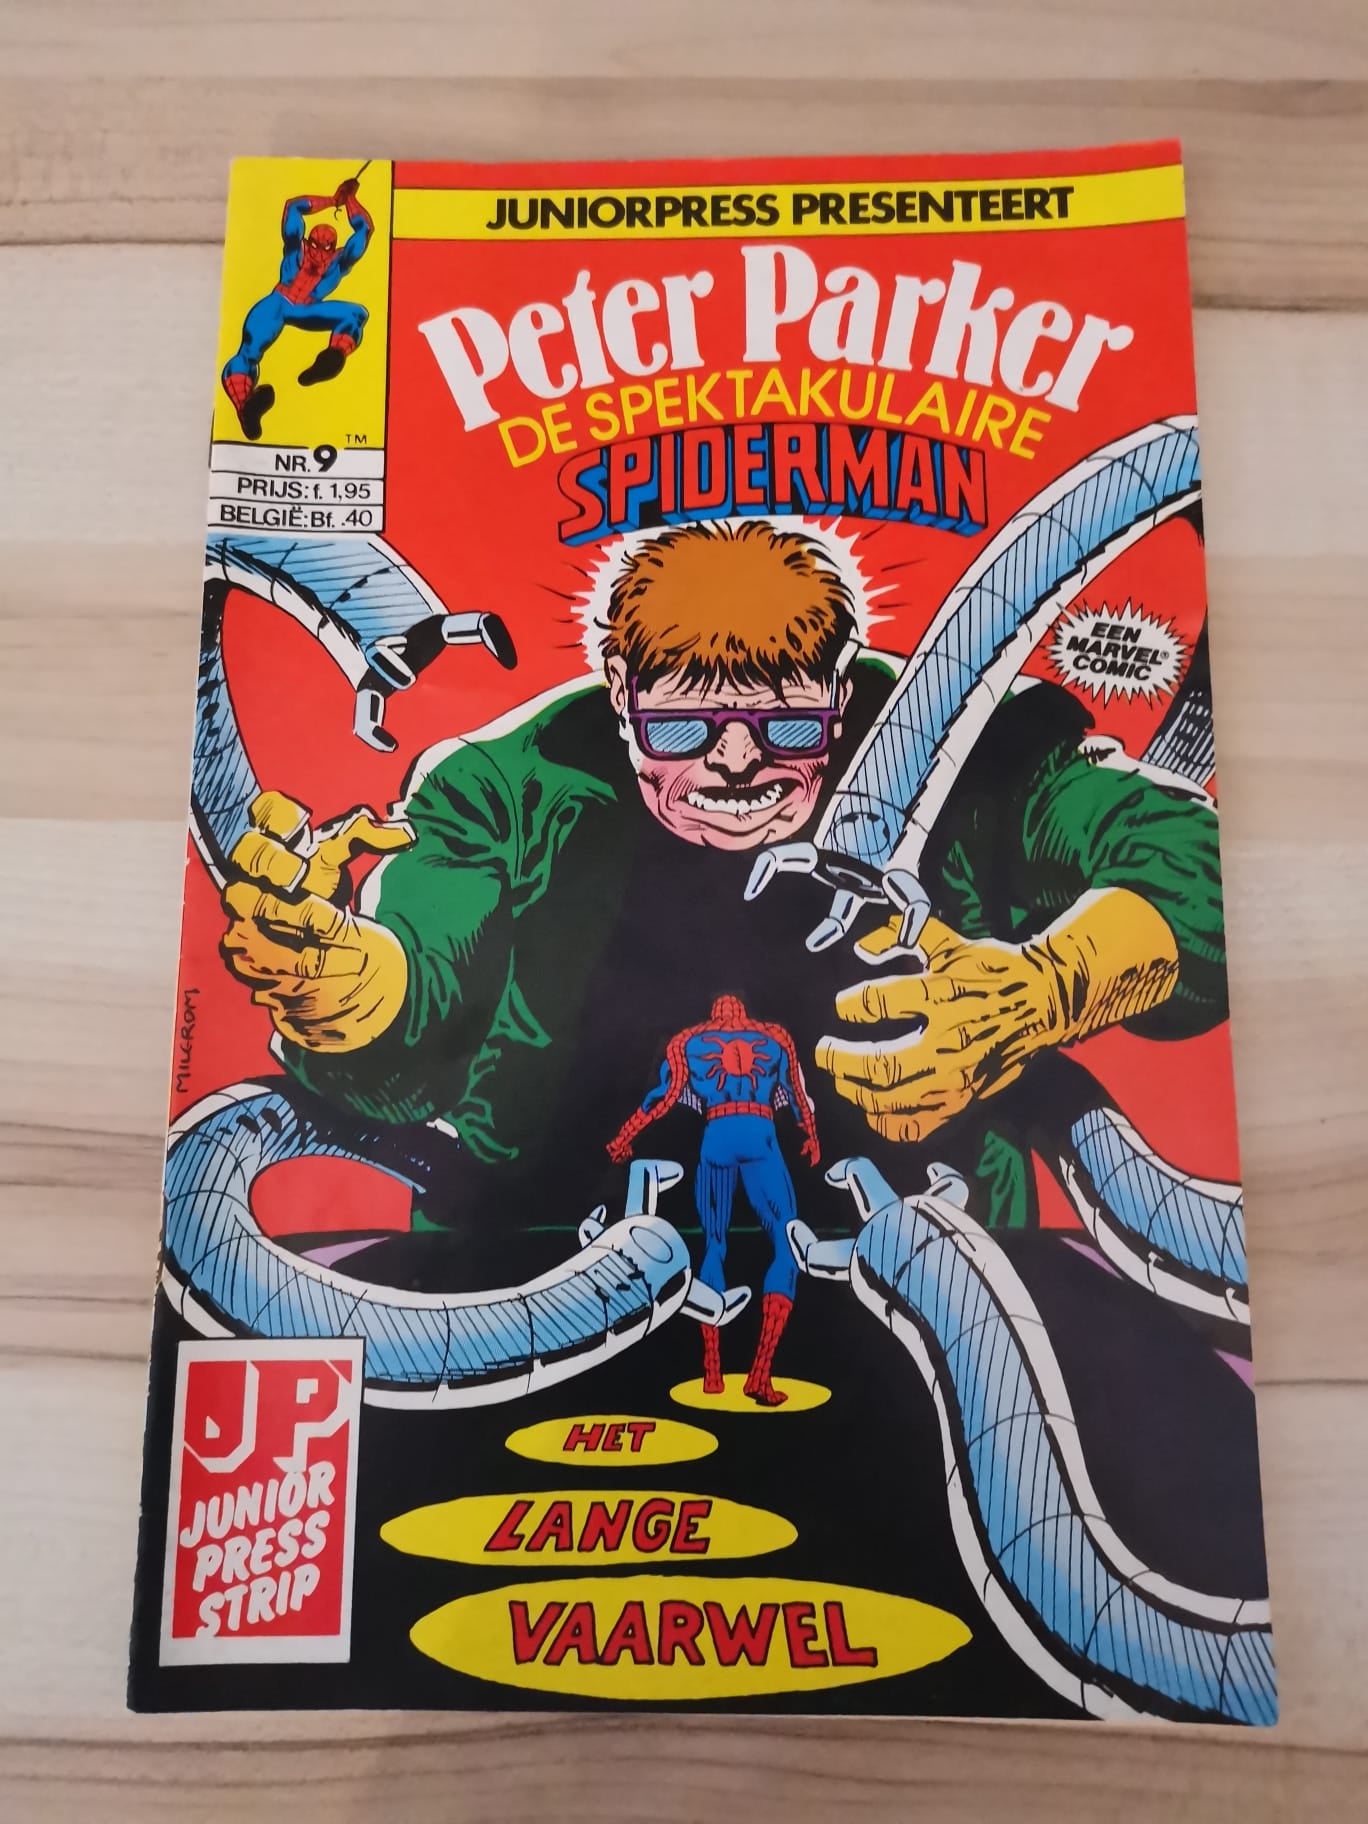 Peter Parker De spektakulaire spiderman #9